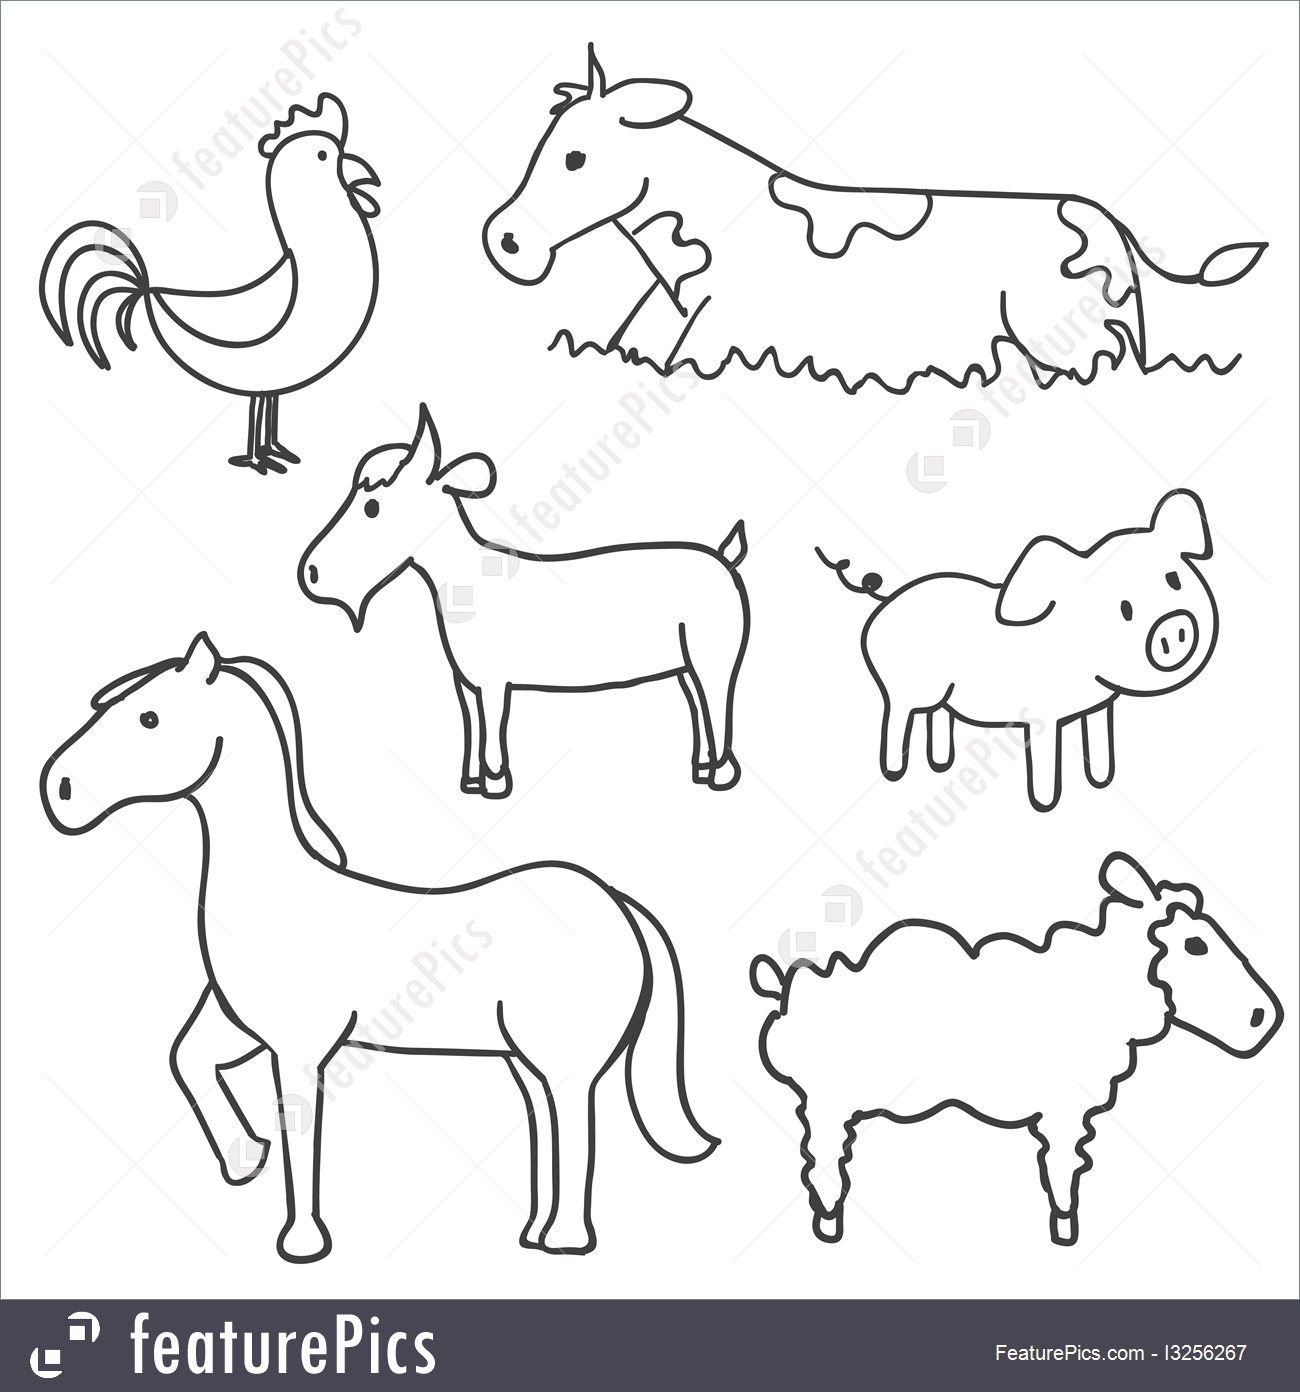 Farm Animals Sketch at Explore collection of Farm